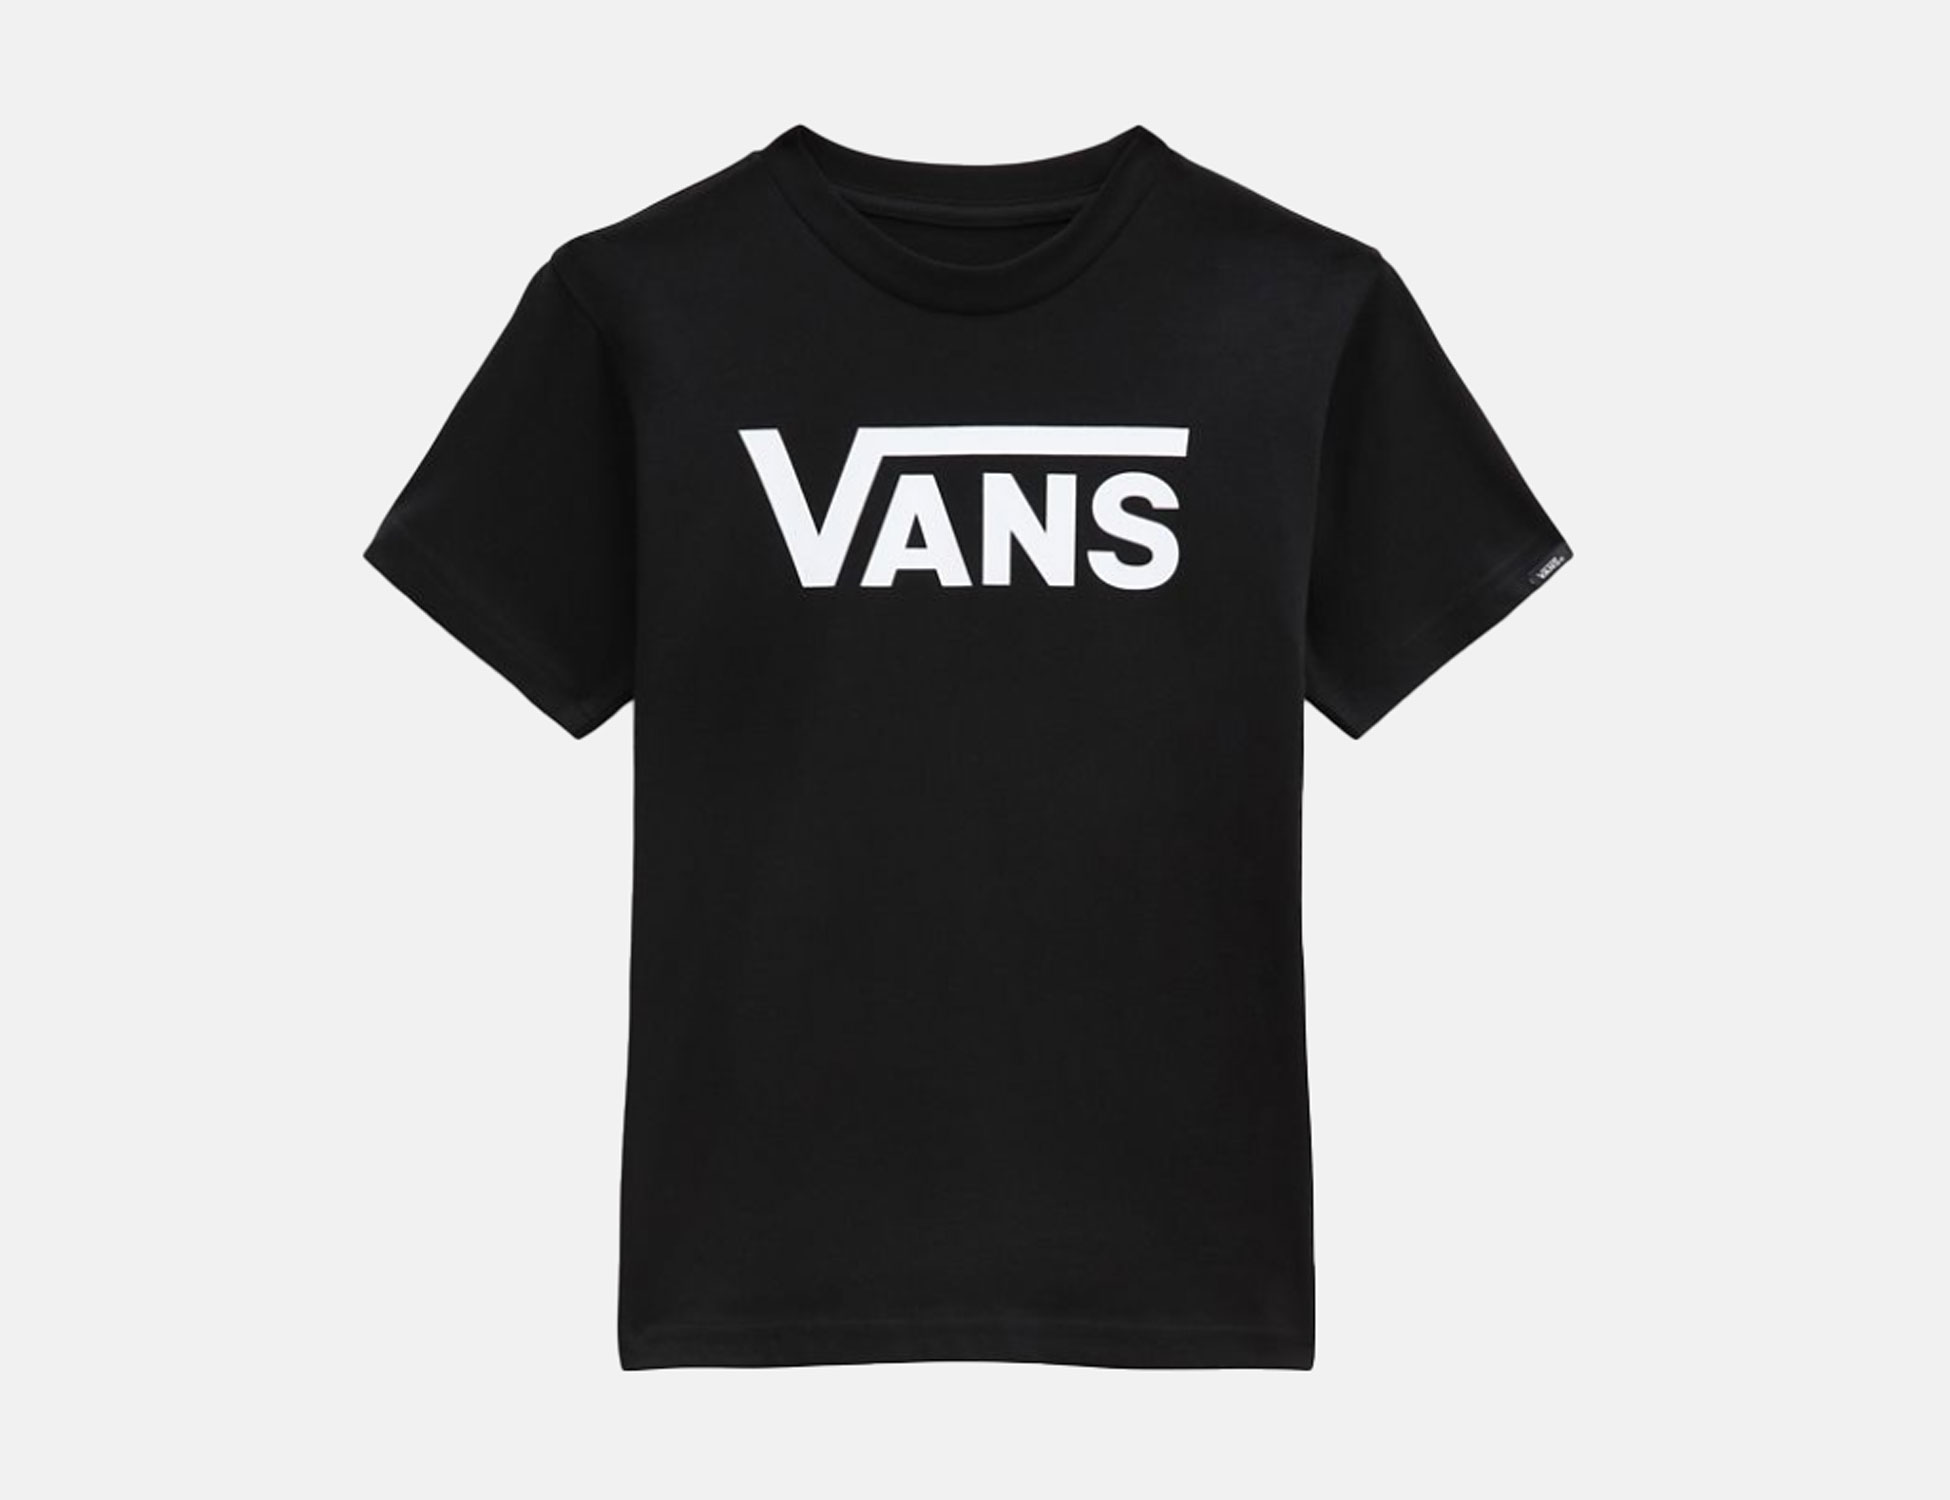 VANS Classic Kids T-Shirt - Black / White | Blowout